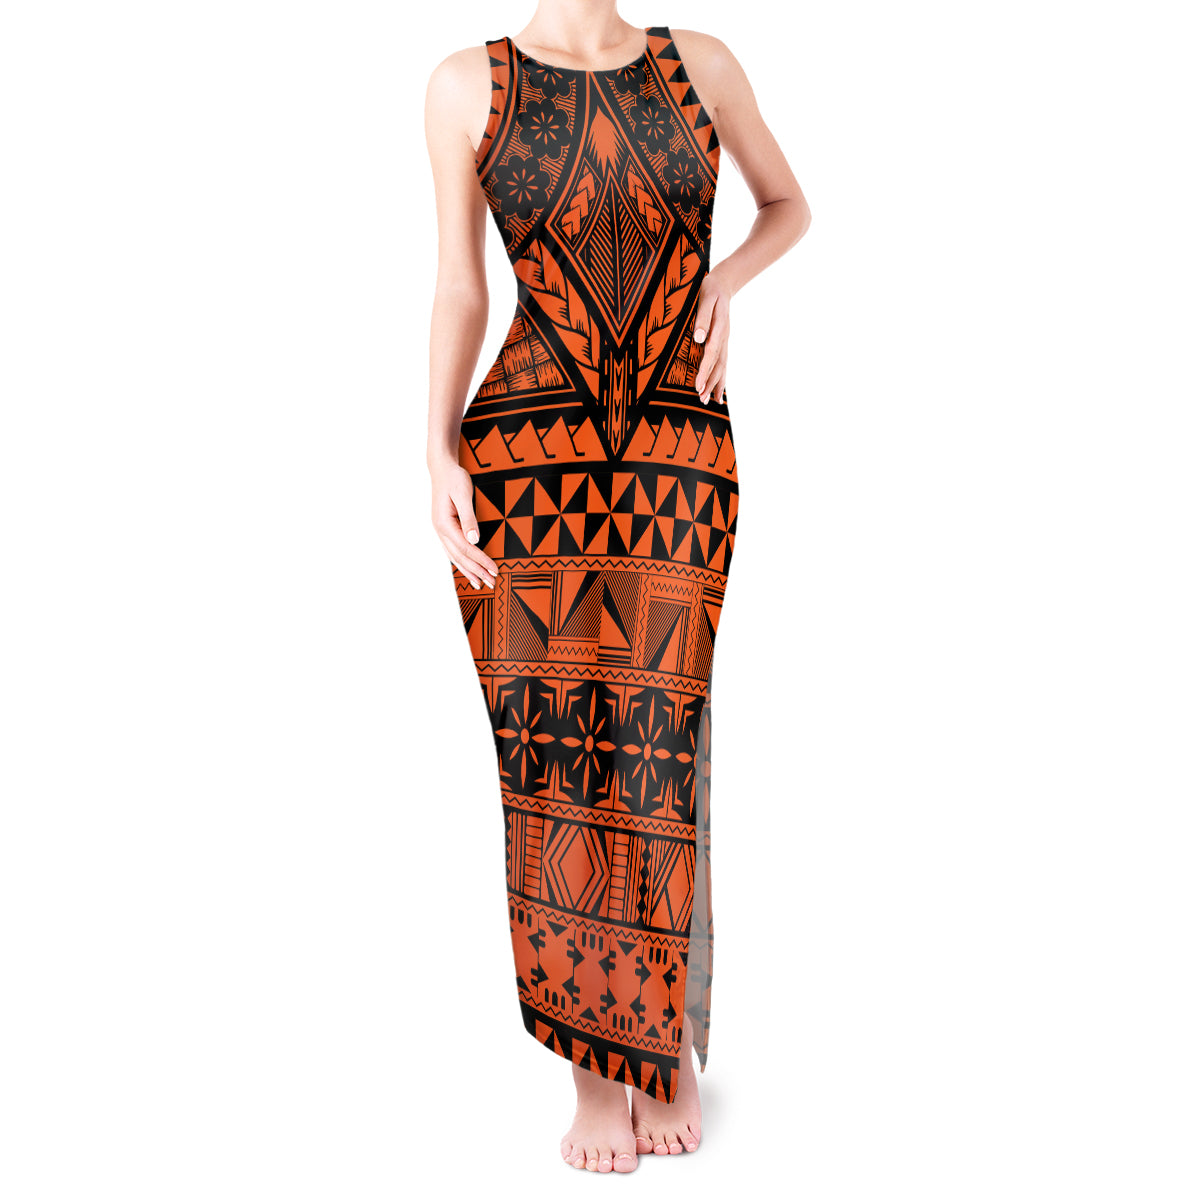 Halo Olaketa Solomon Islands Tank Maxi Dress Melanesian Tribal Pattern Orange Version LT14 Women Orange - Polynesian Pride